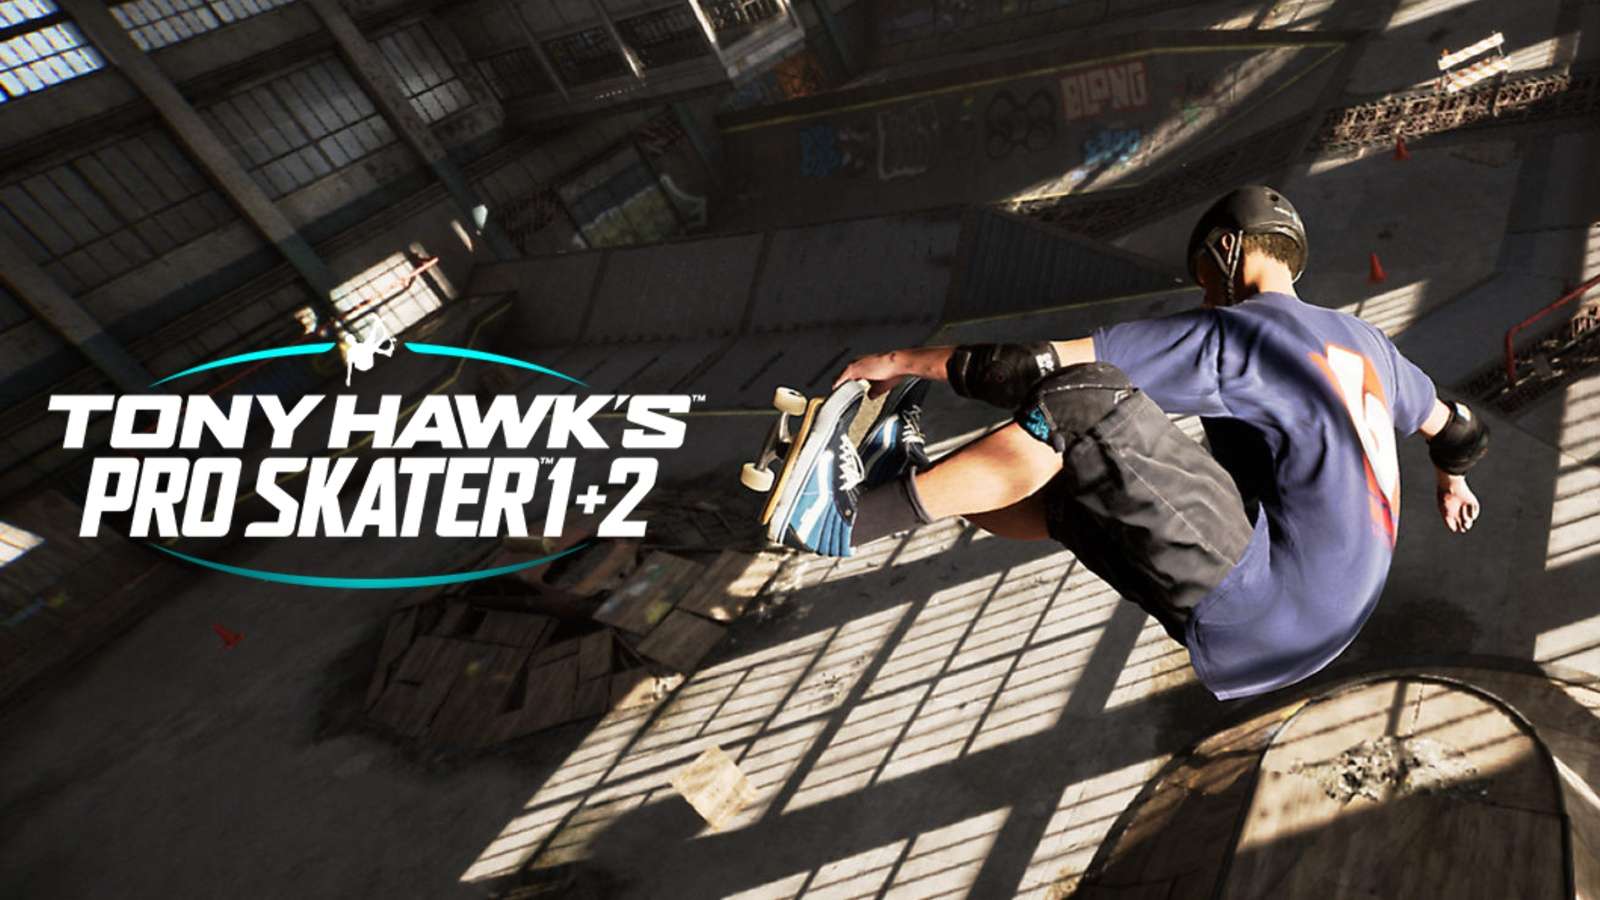 Tony Hawk's Pro Skater 1+2 remaster will feature classic pro